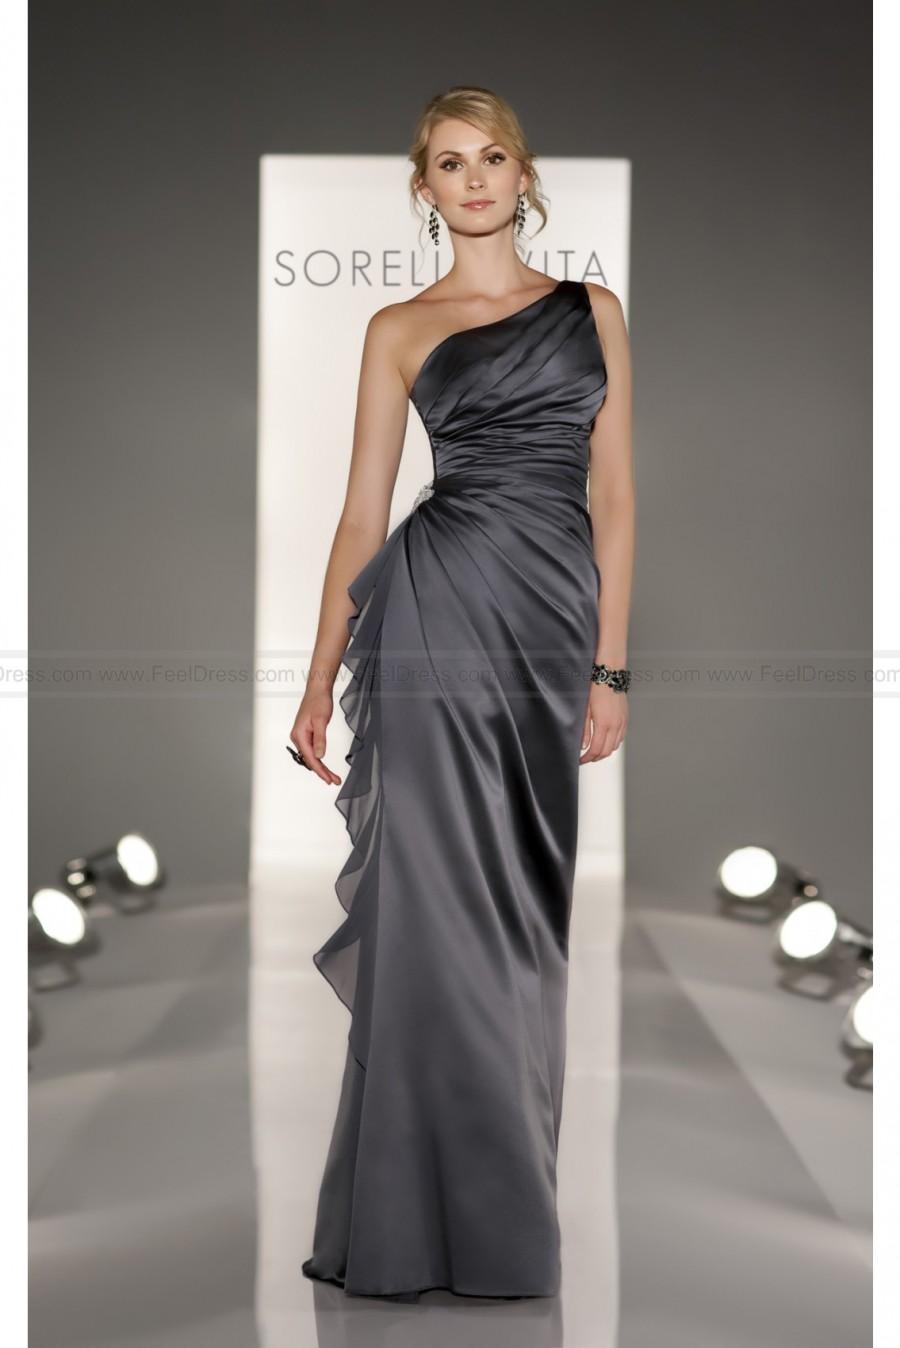 Hochzeit - Sorella Vita Grey Bridesmaid Dress Style 8191